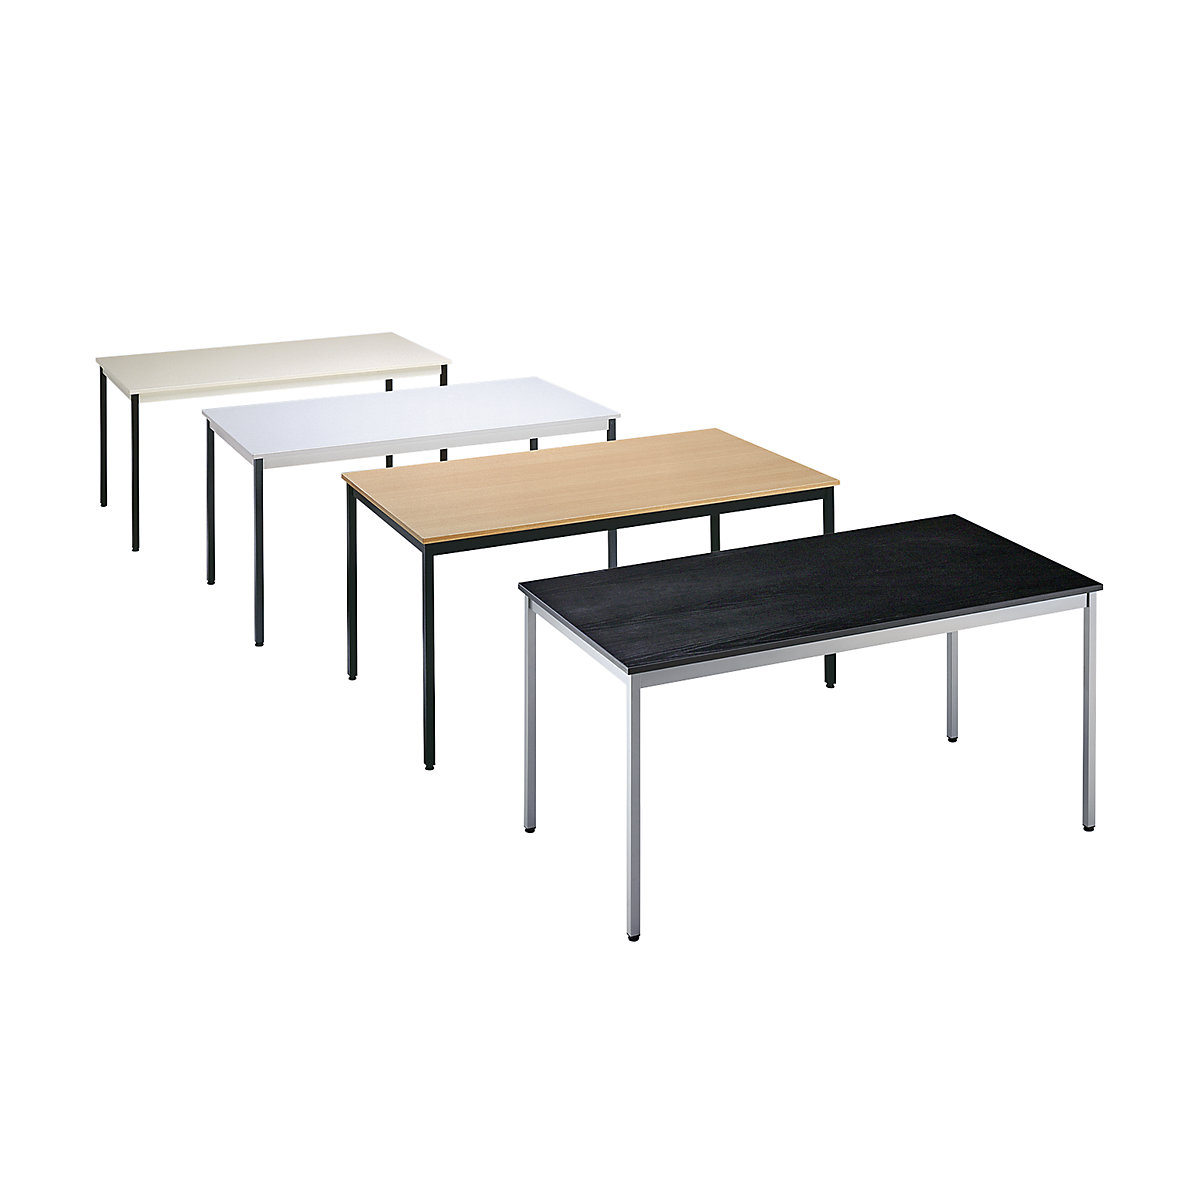 Universele tafel – eurokraft basic, rechthoekig, b x h = 1200 x 740 mm, diepte 600 mm, blad ahornhoutdecor, frame blank aluminiumkleurig-1